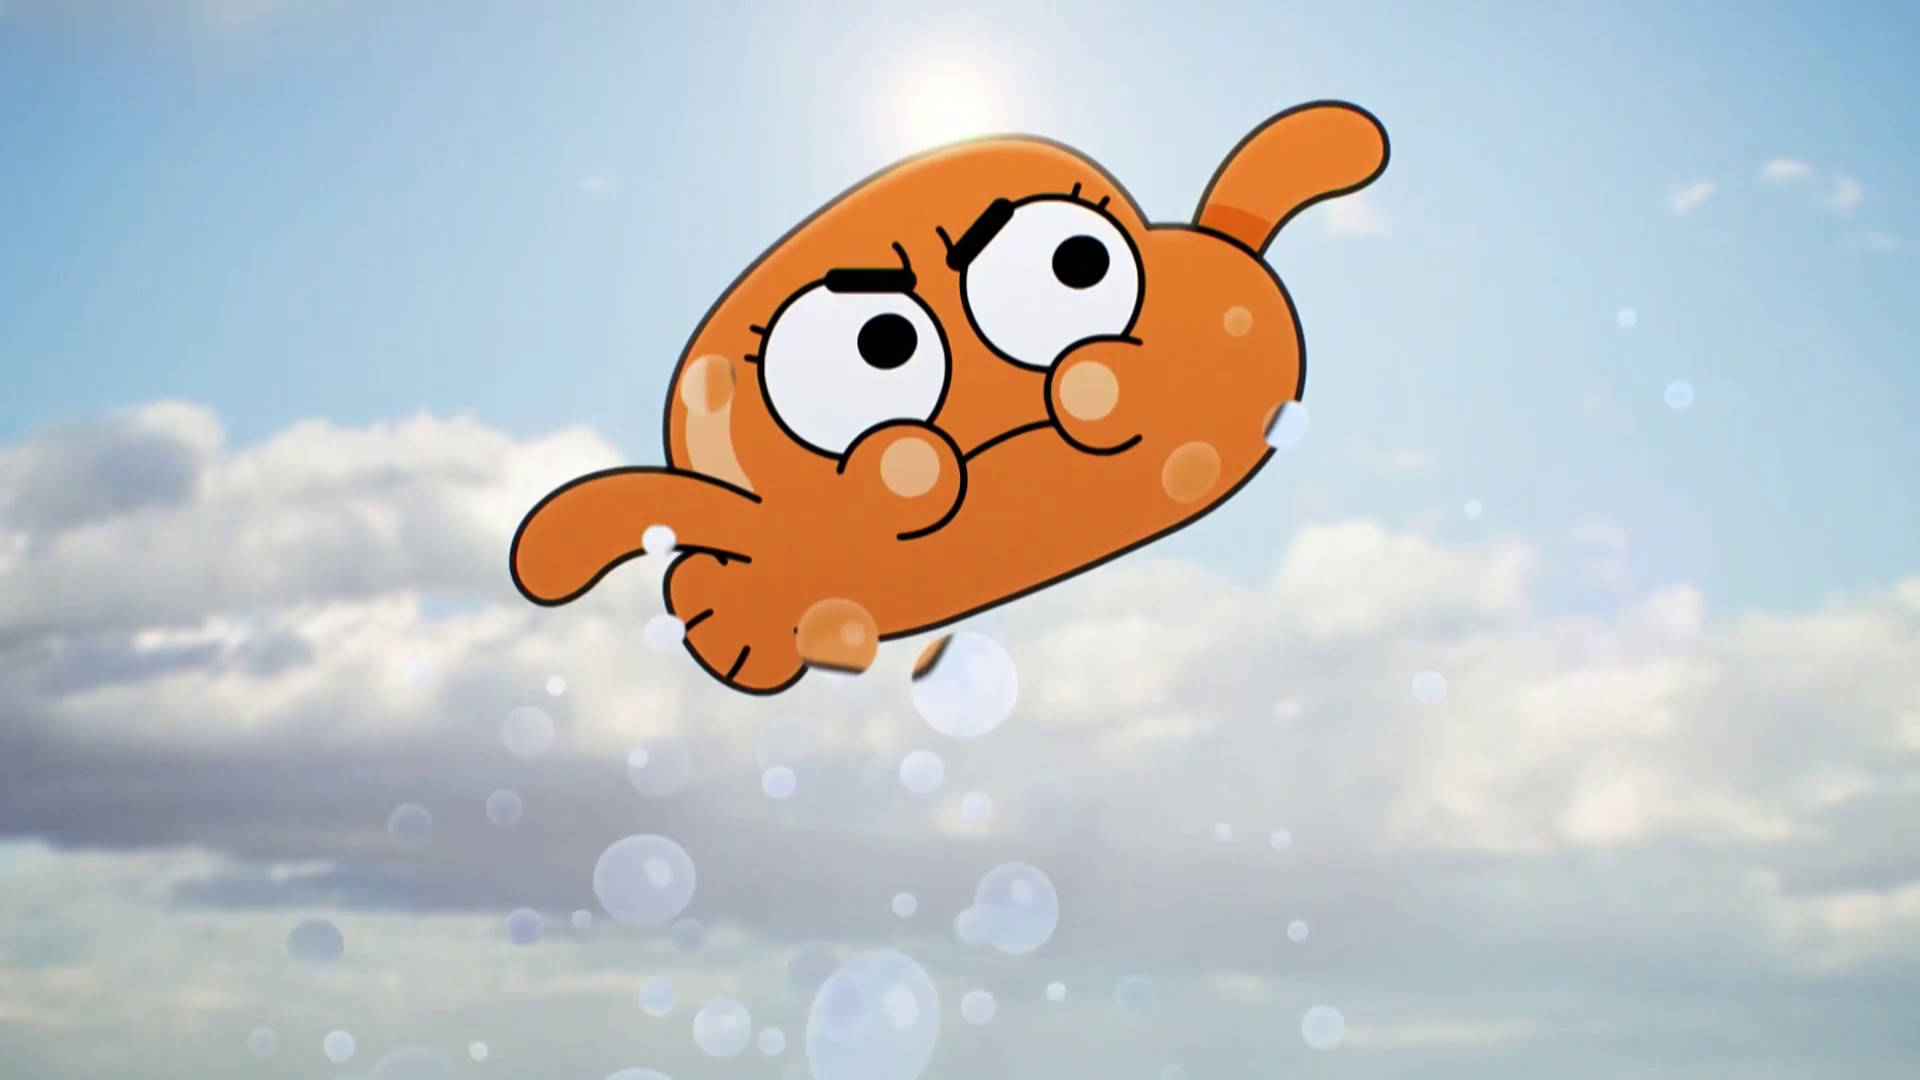 En tegneserie orange fisk der flyver i himlen Wallpaper